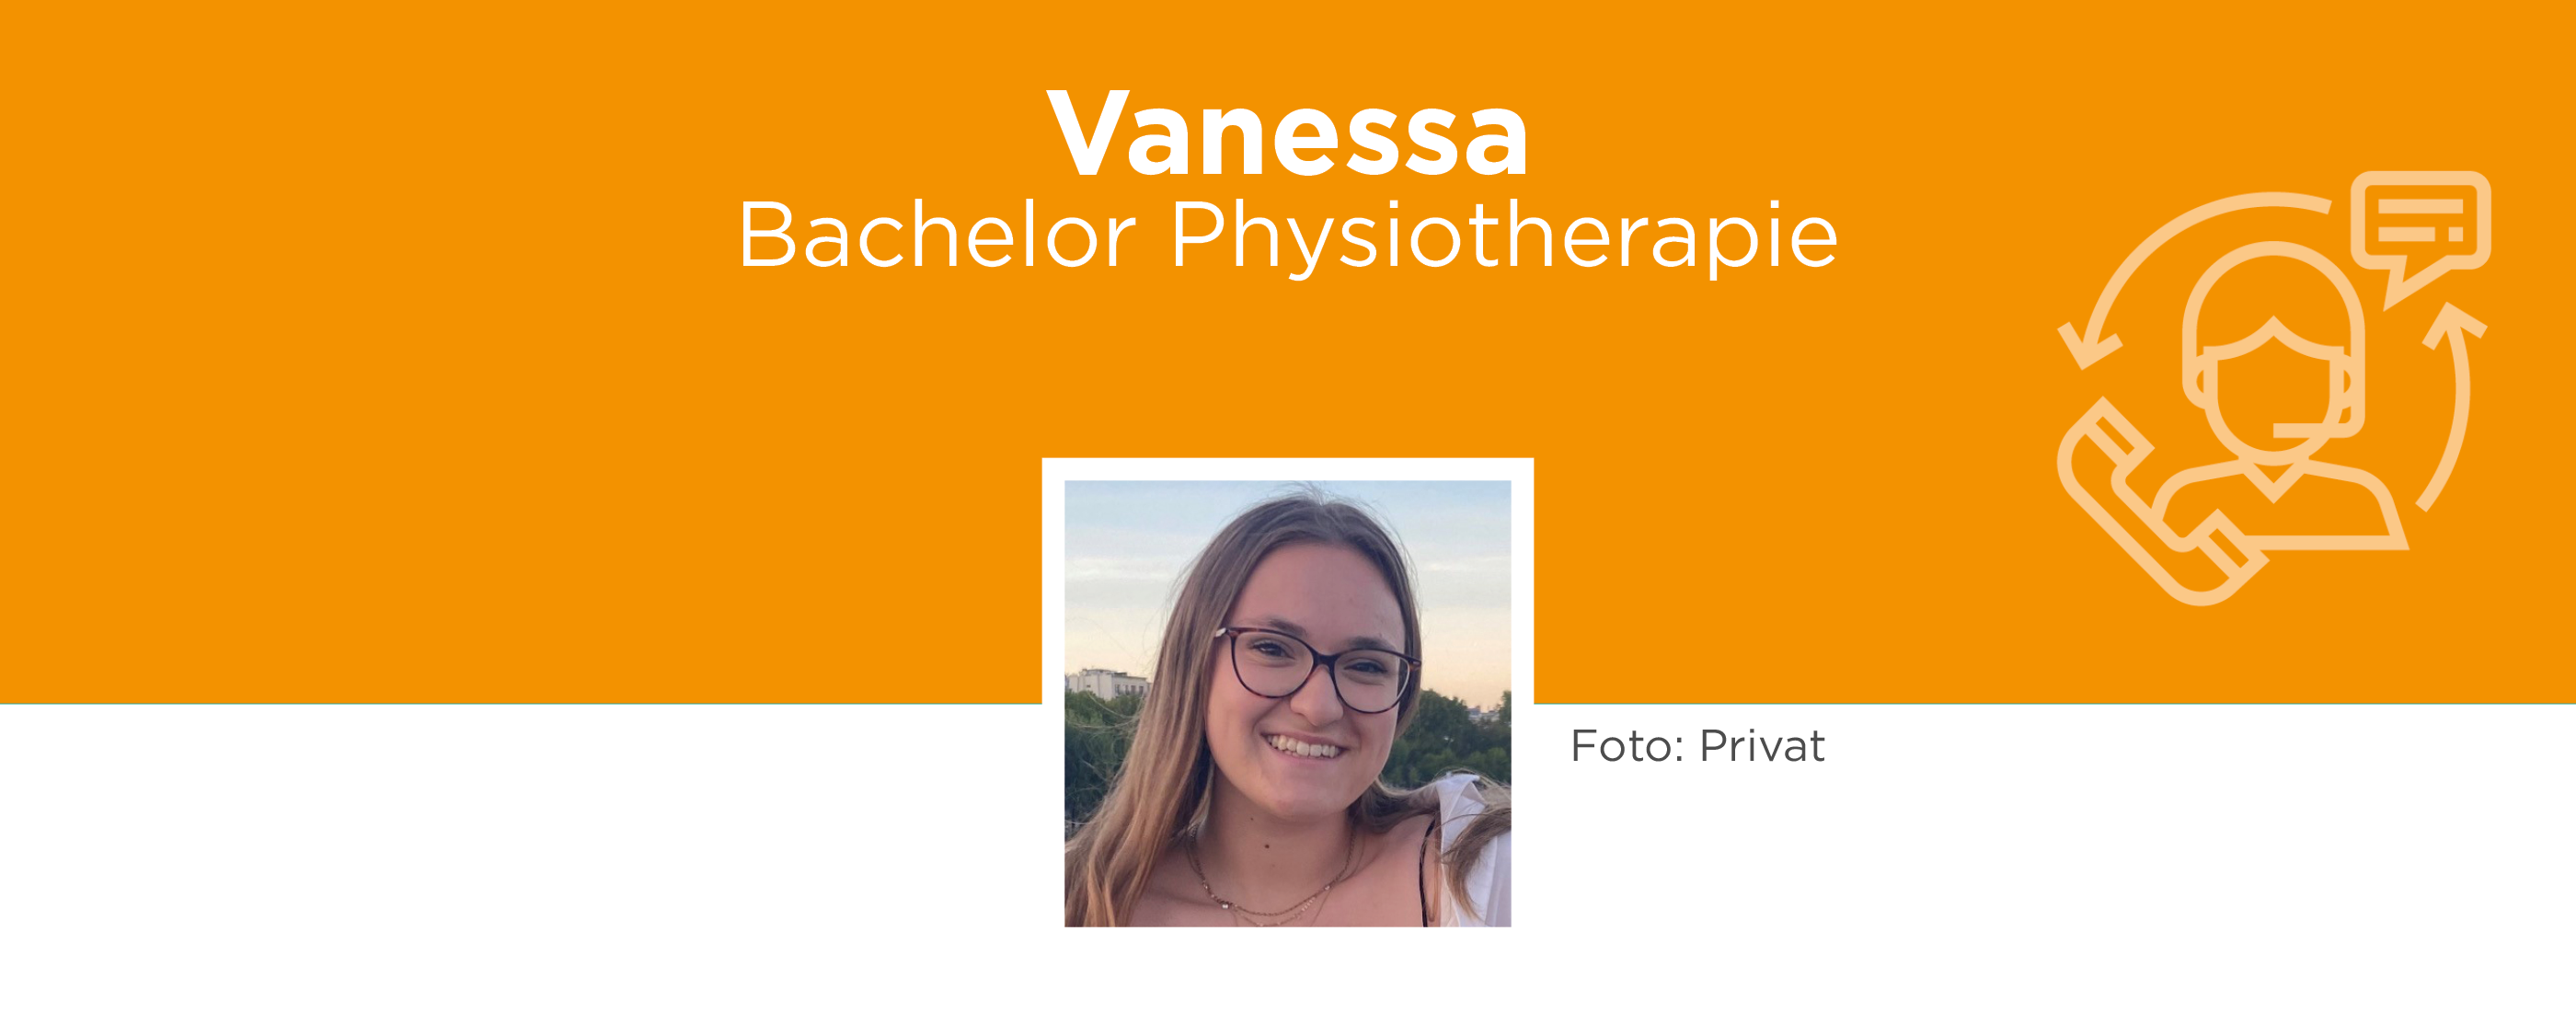 Vanessa: Bachelor Physiotherapie